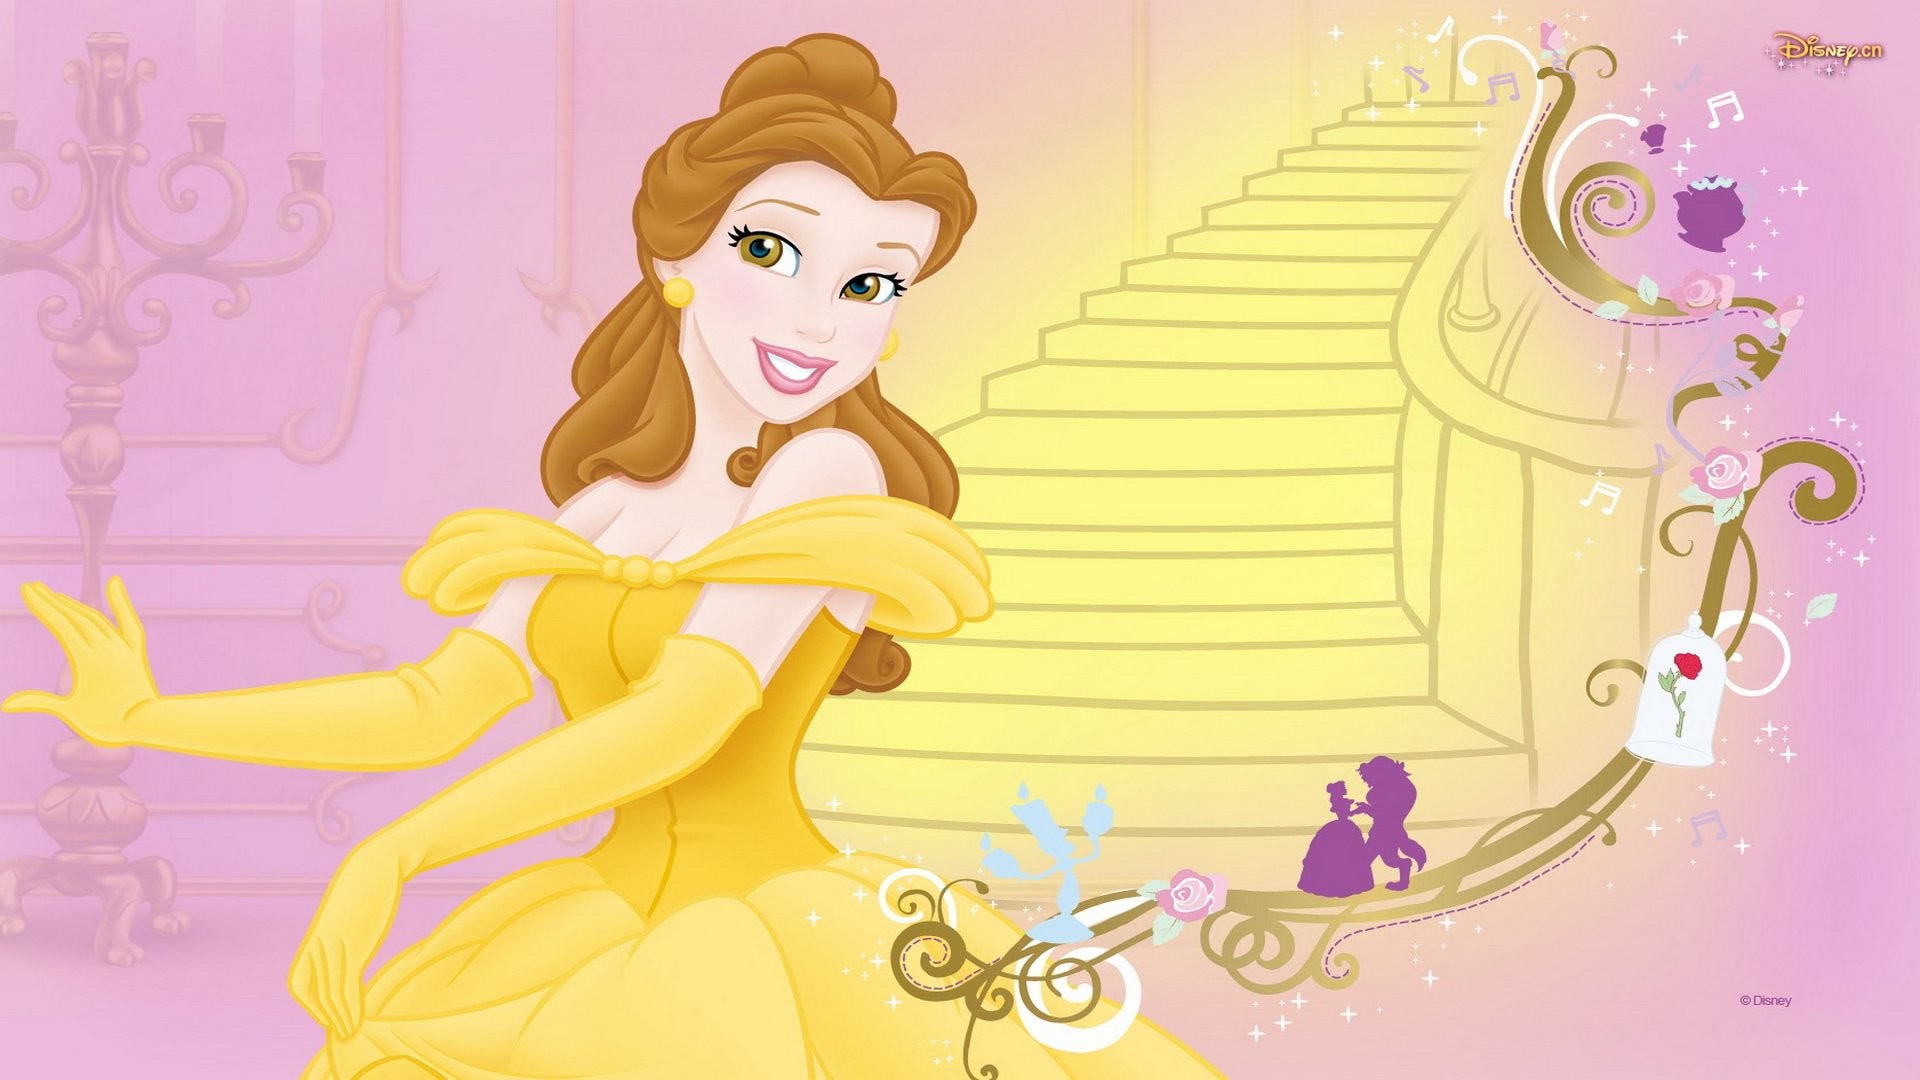 Wallpaper ID: 849506 / Belle, castle, dance, fairytale, 2K, enchanted  Prince, Beauty and the Beast, cartoon, Disney, prince Wallpaper